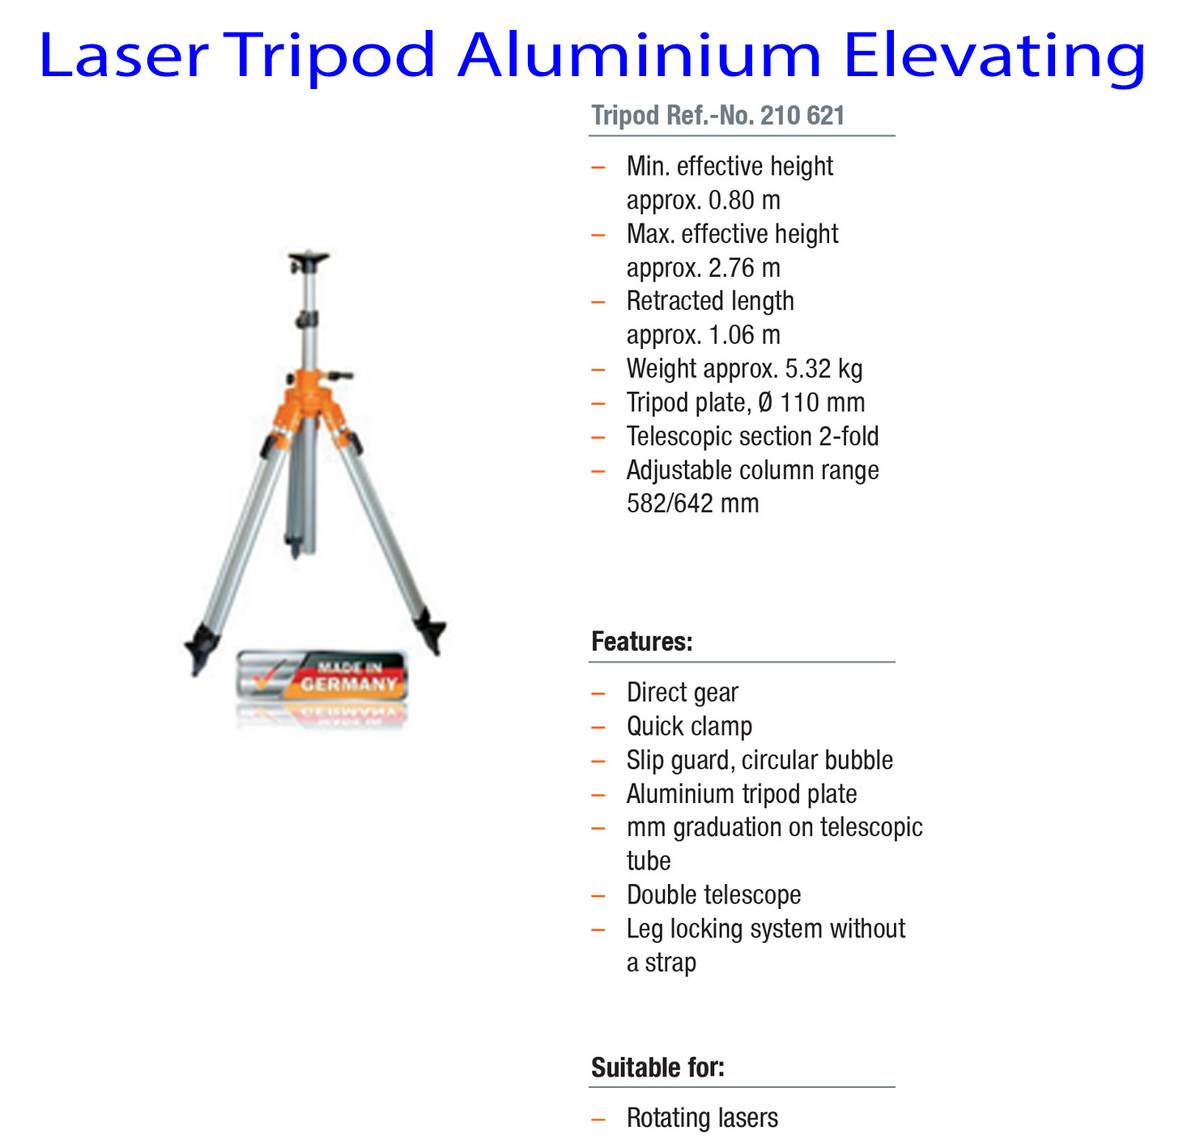 Laser-Tripod-Aluminium-Elevating-info.jp